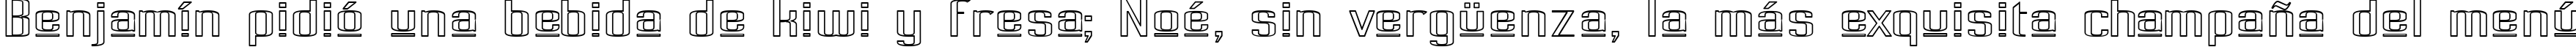 Пример написания шрифтом Pecot Upper Outline текста на испанском